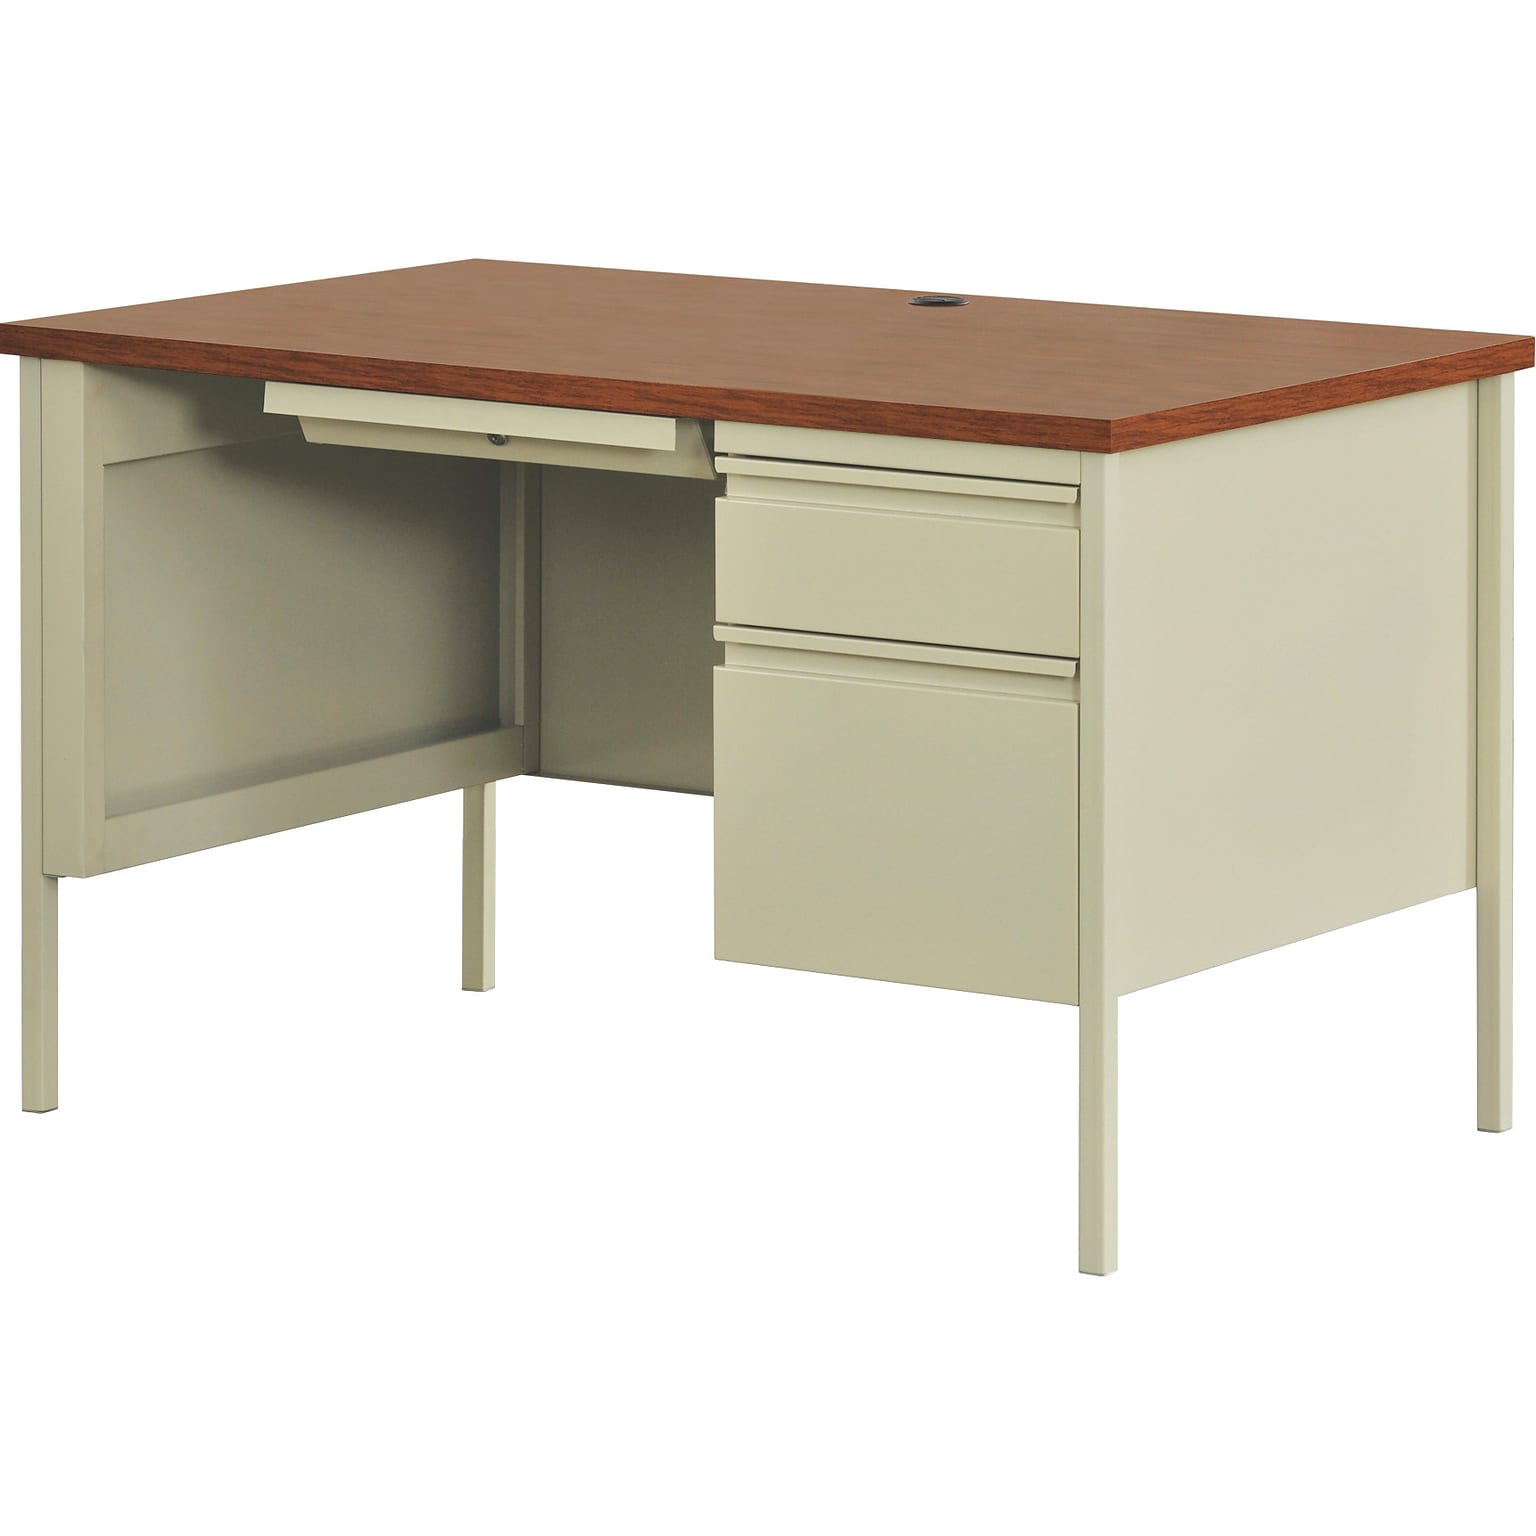 Hirsh 48W Single-Pedestal Desk, Putty/Oak (20091)